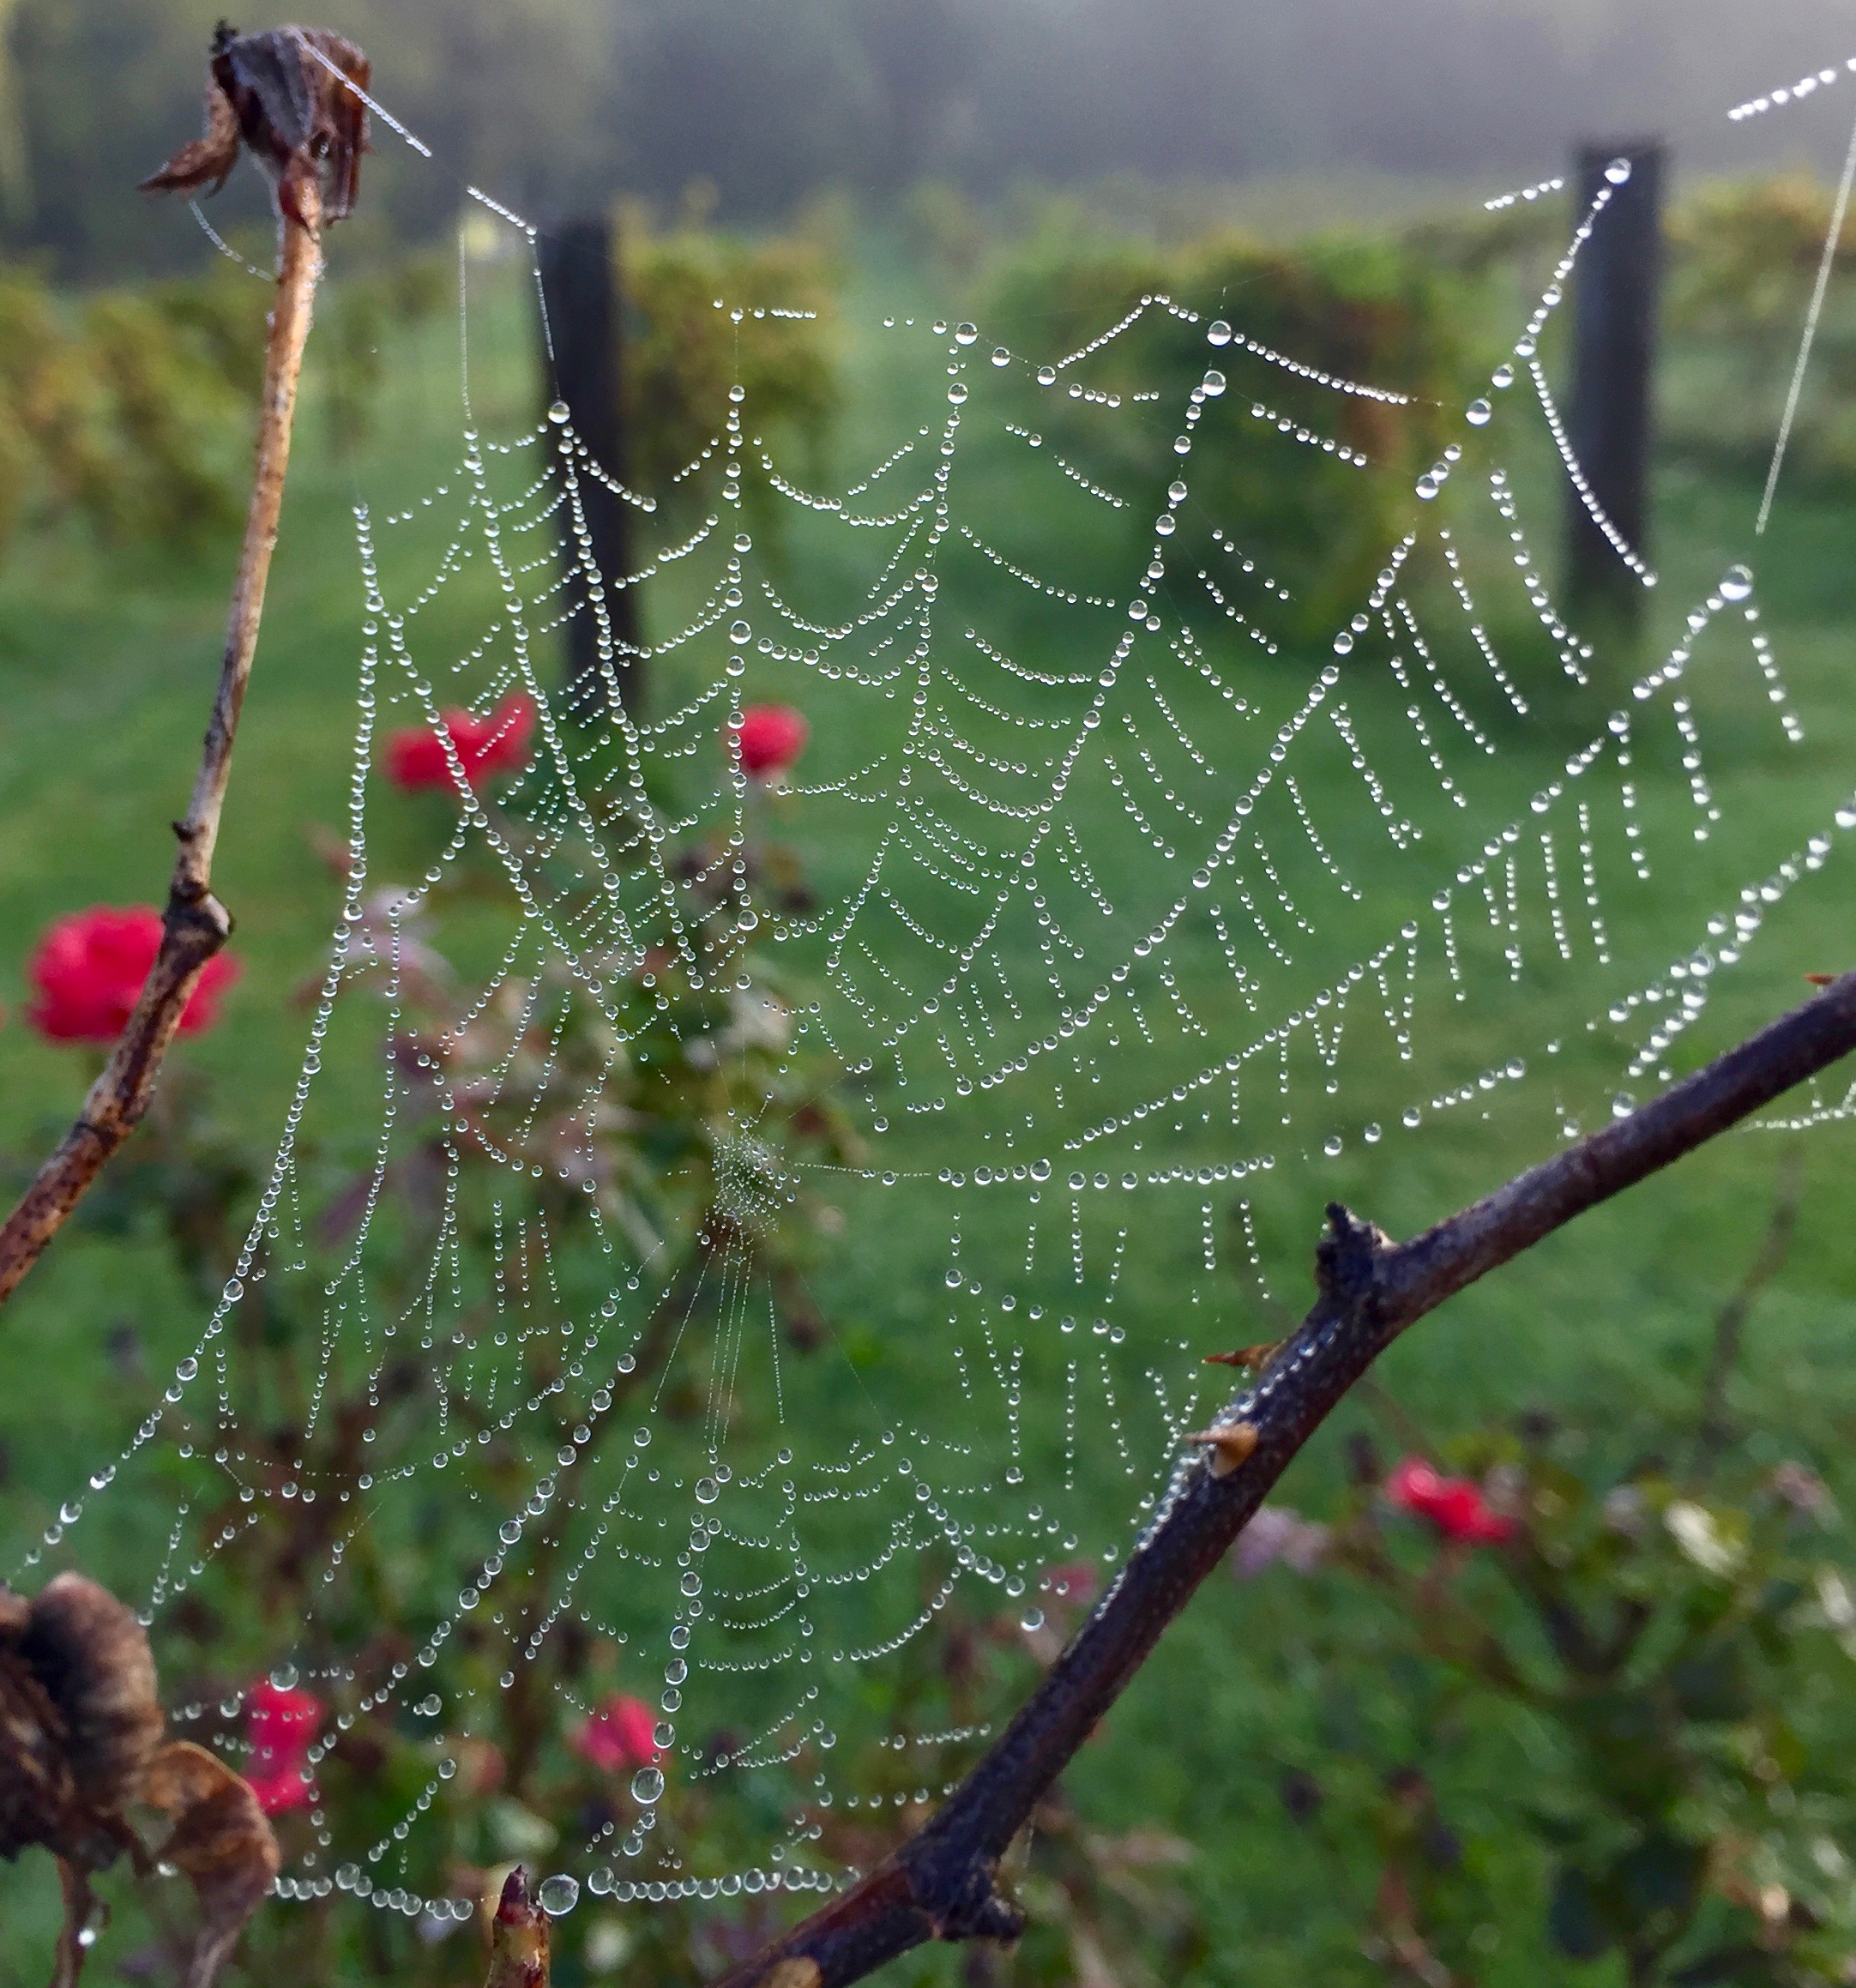 Spiderweb in dew with Mist